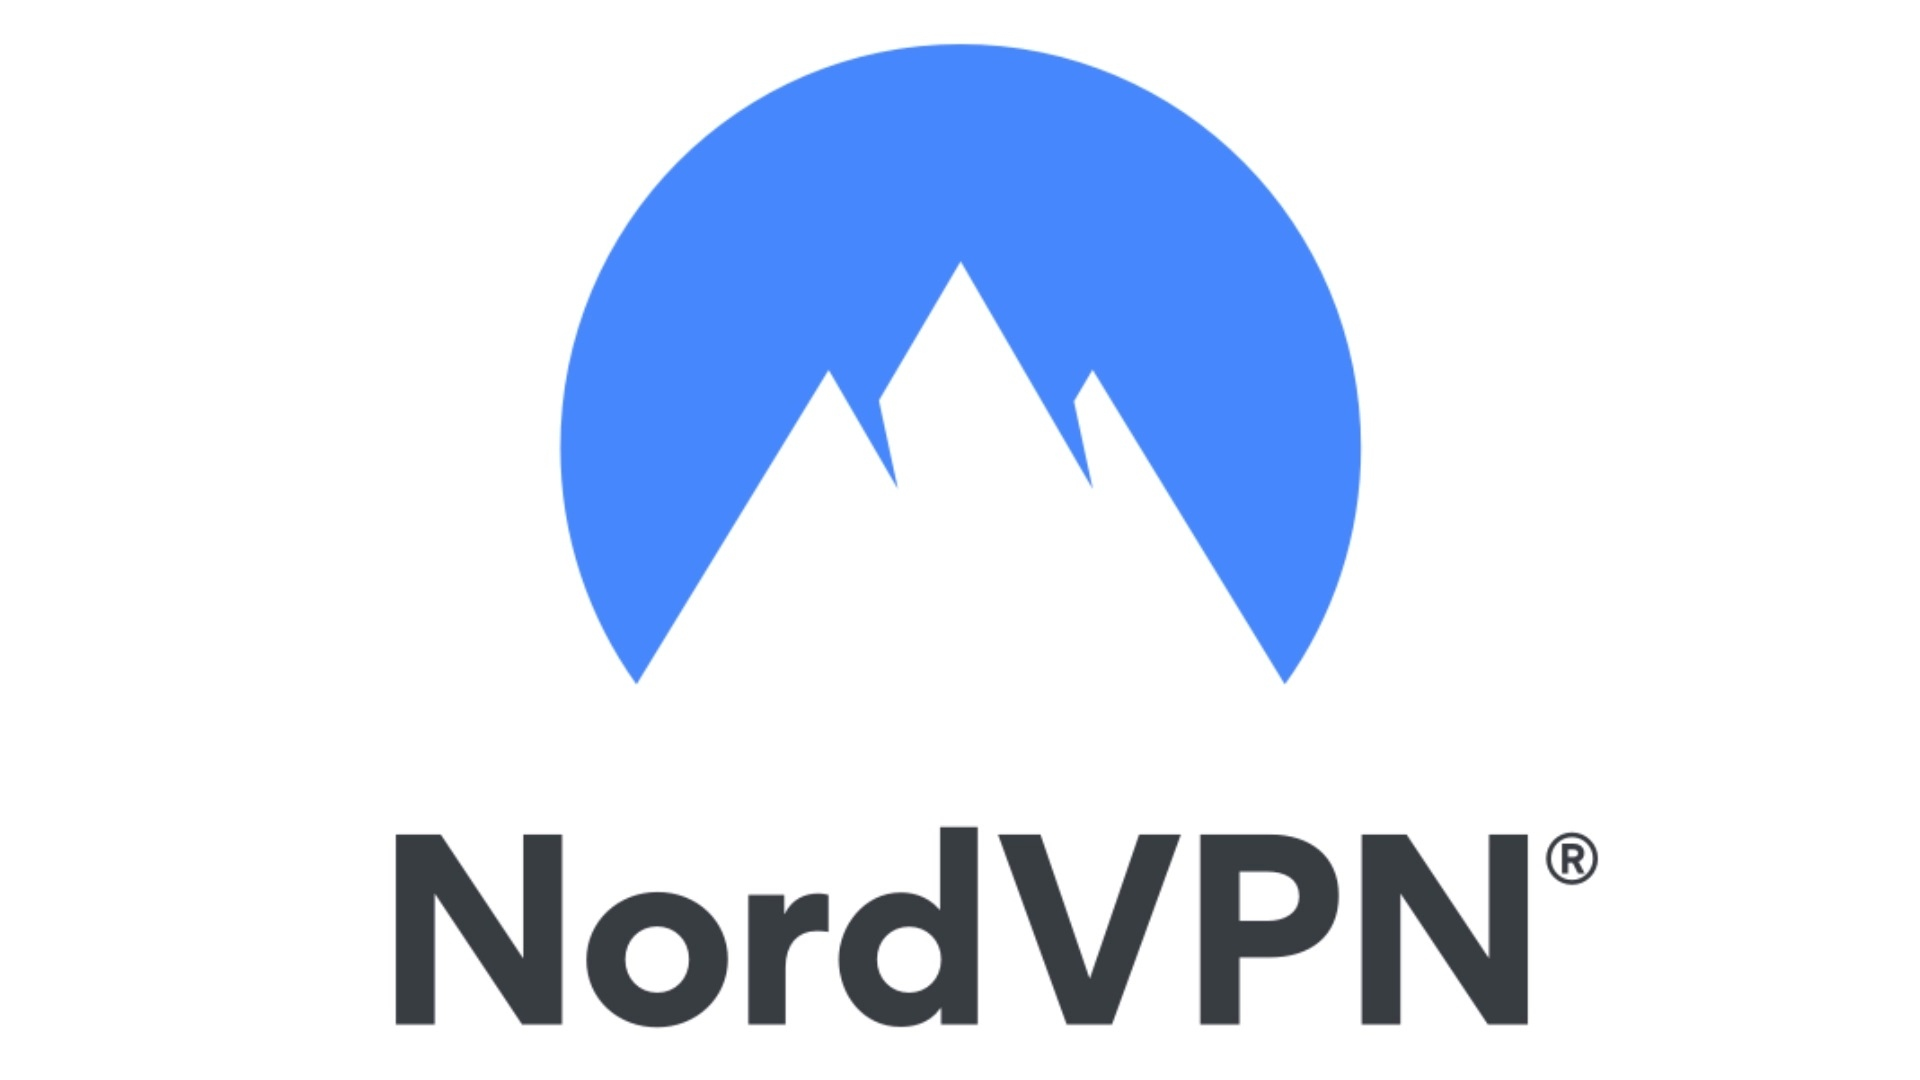 Best BBC iPlayer VPN: NordVPN. Image shows the company logo.